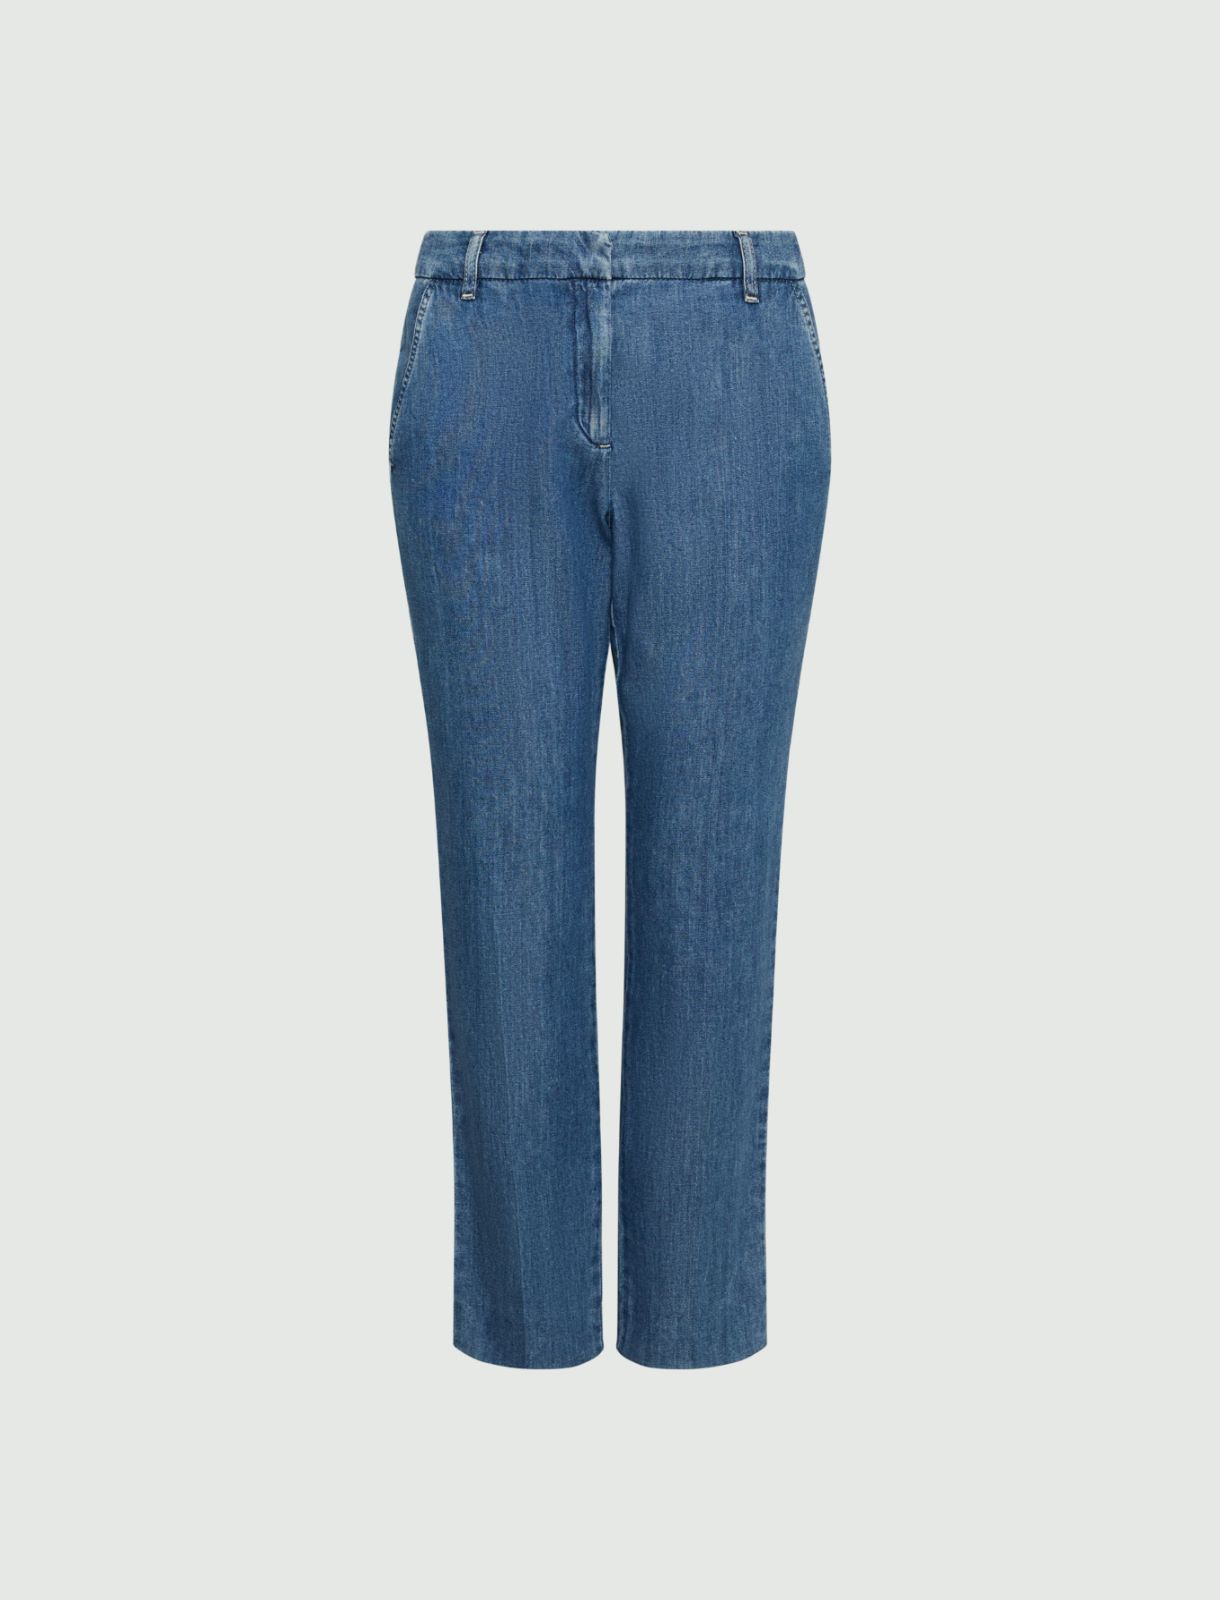 Jeans chino - Blue jeans - Marella - 6